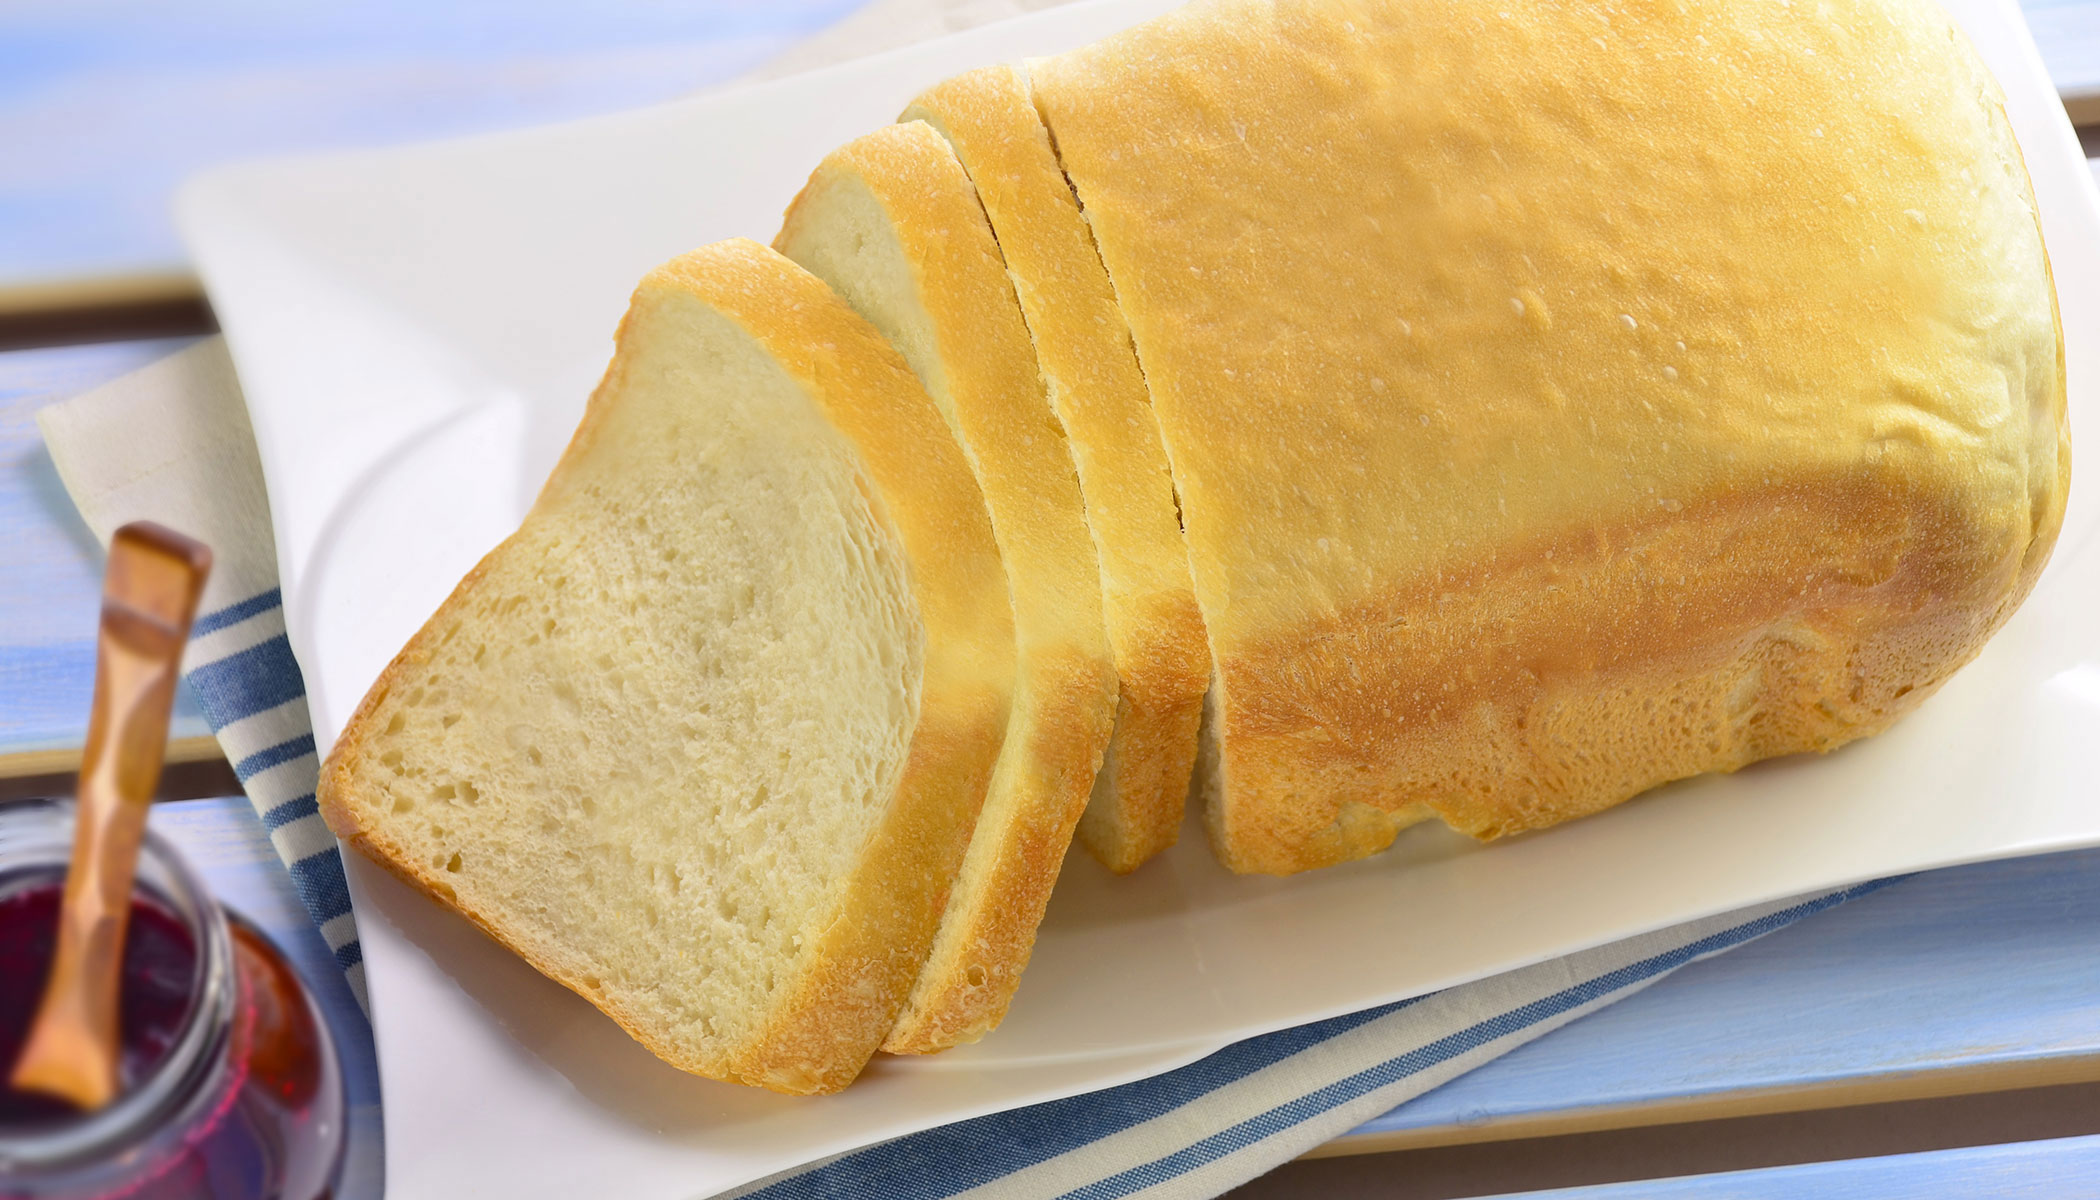 Zojirushi Bread Machine Recipes Small Loaf - Buttermilk Bread For Zojirushi Bread Machine Recipe ...